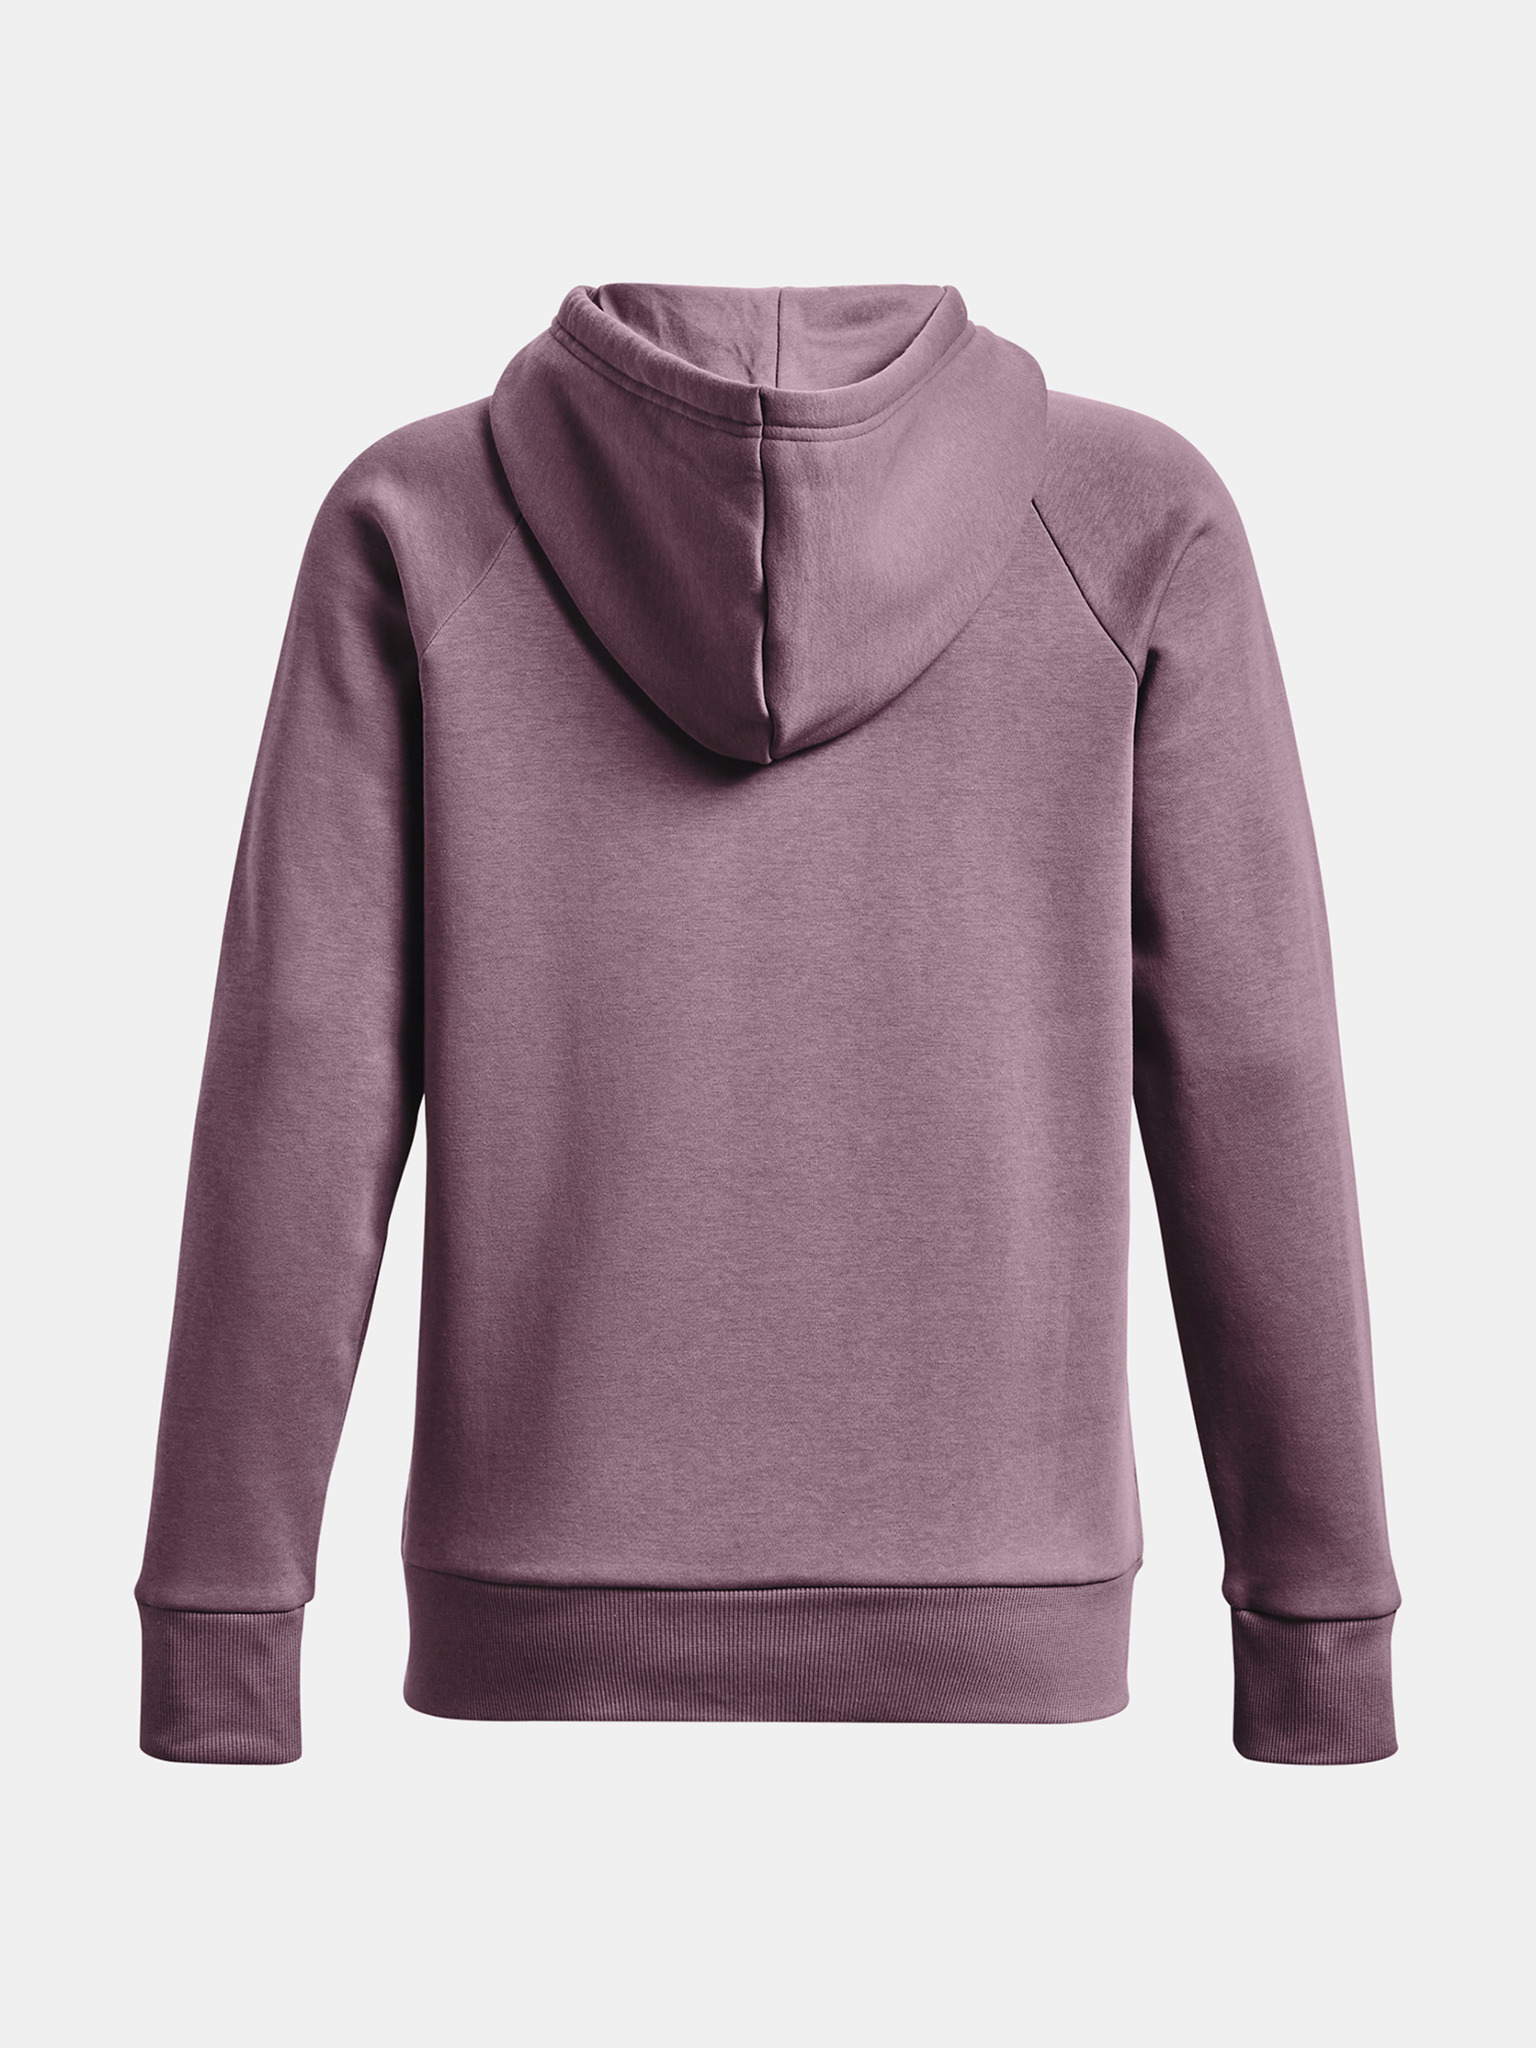 Under Armour Women's Hooded Sweatshirt Rival Fleece Big Logo  (Black)-1379501-500